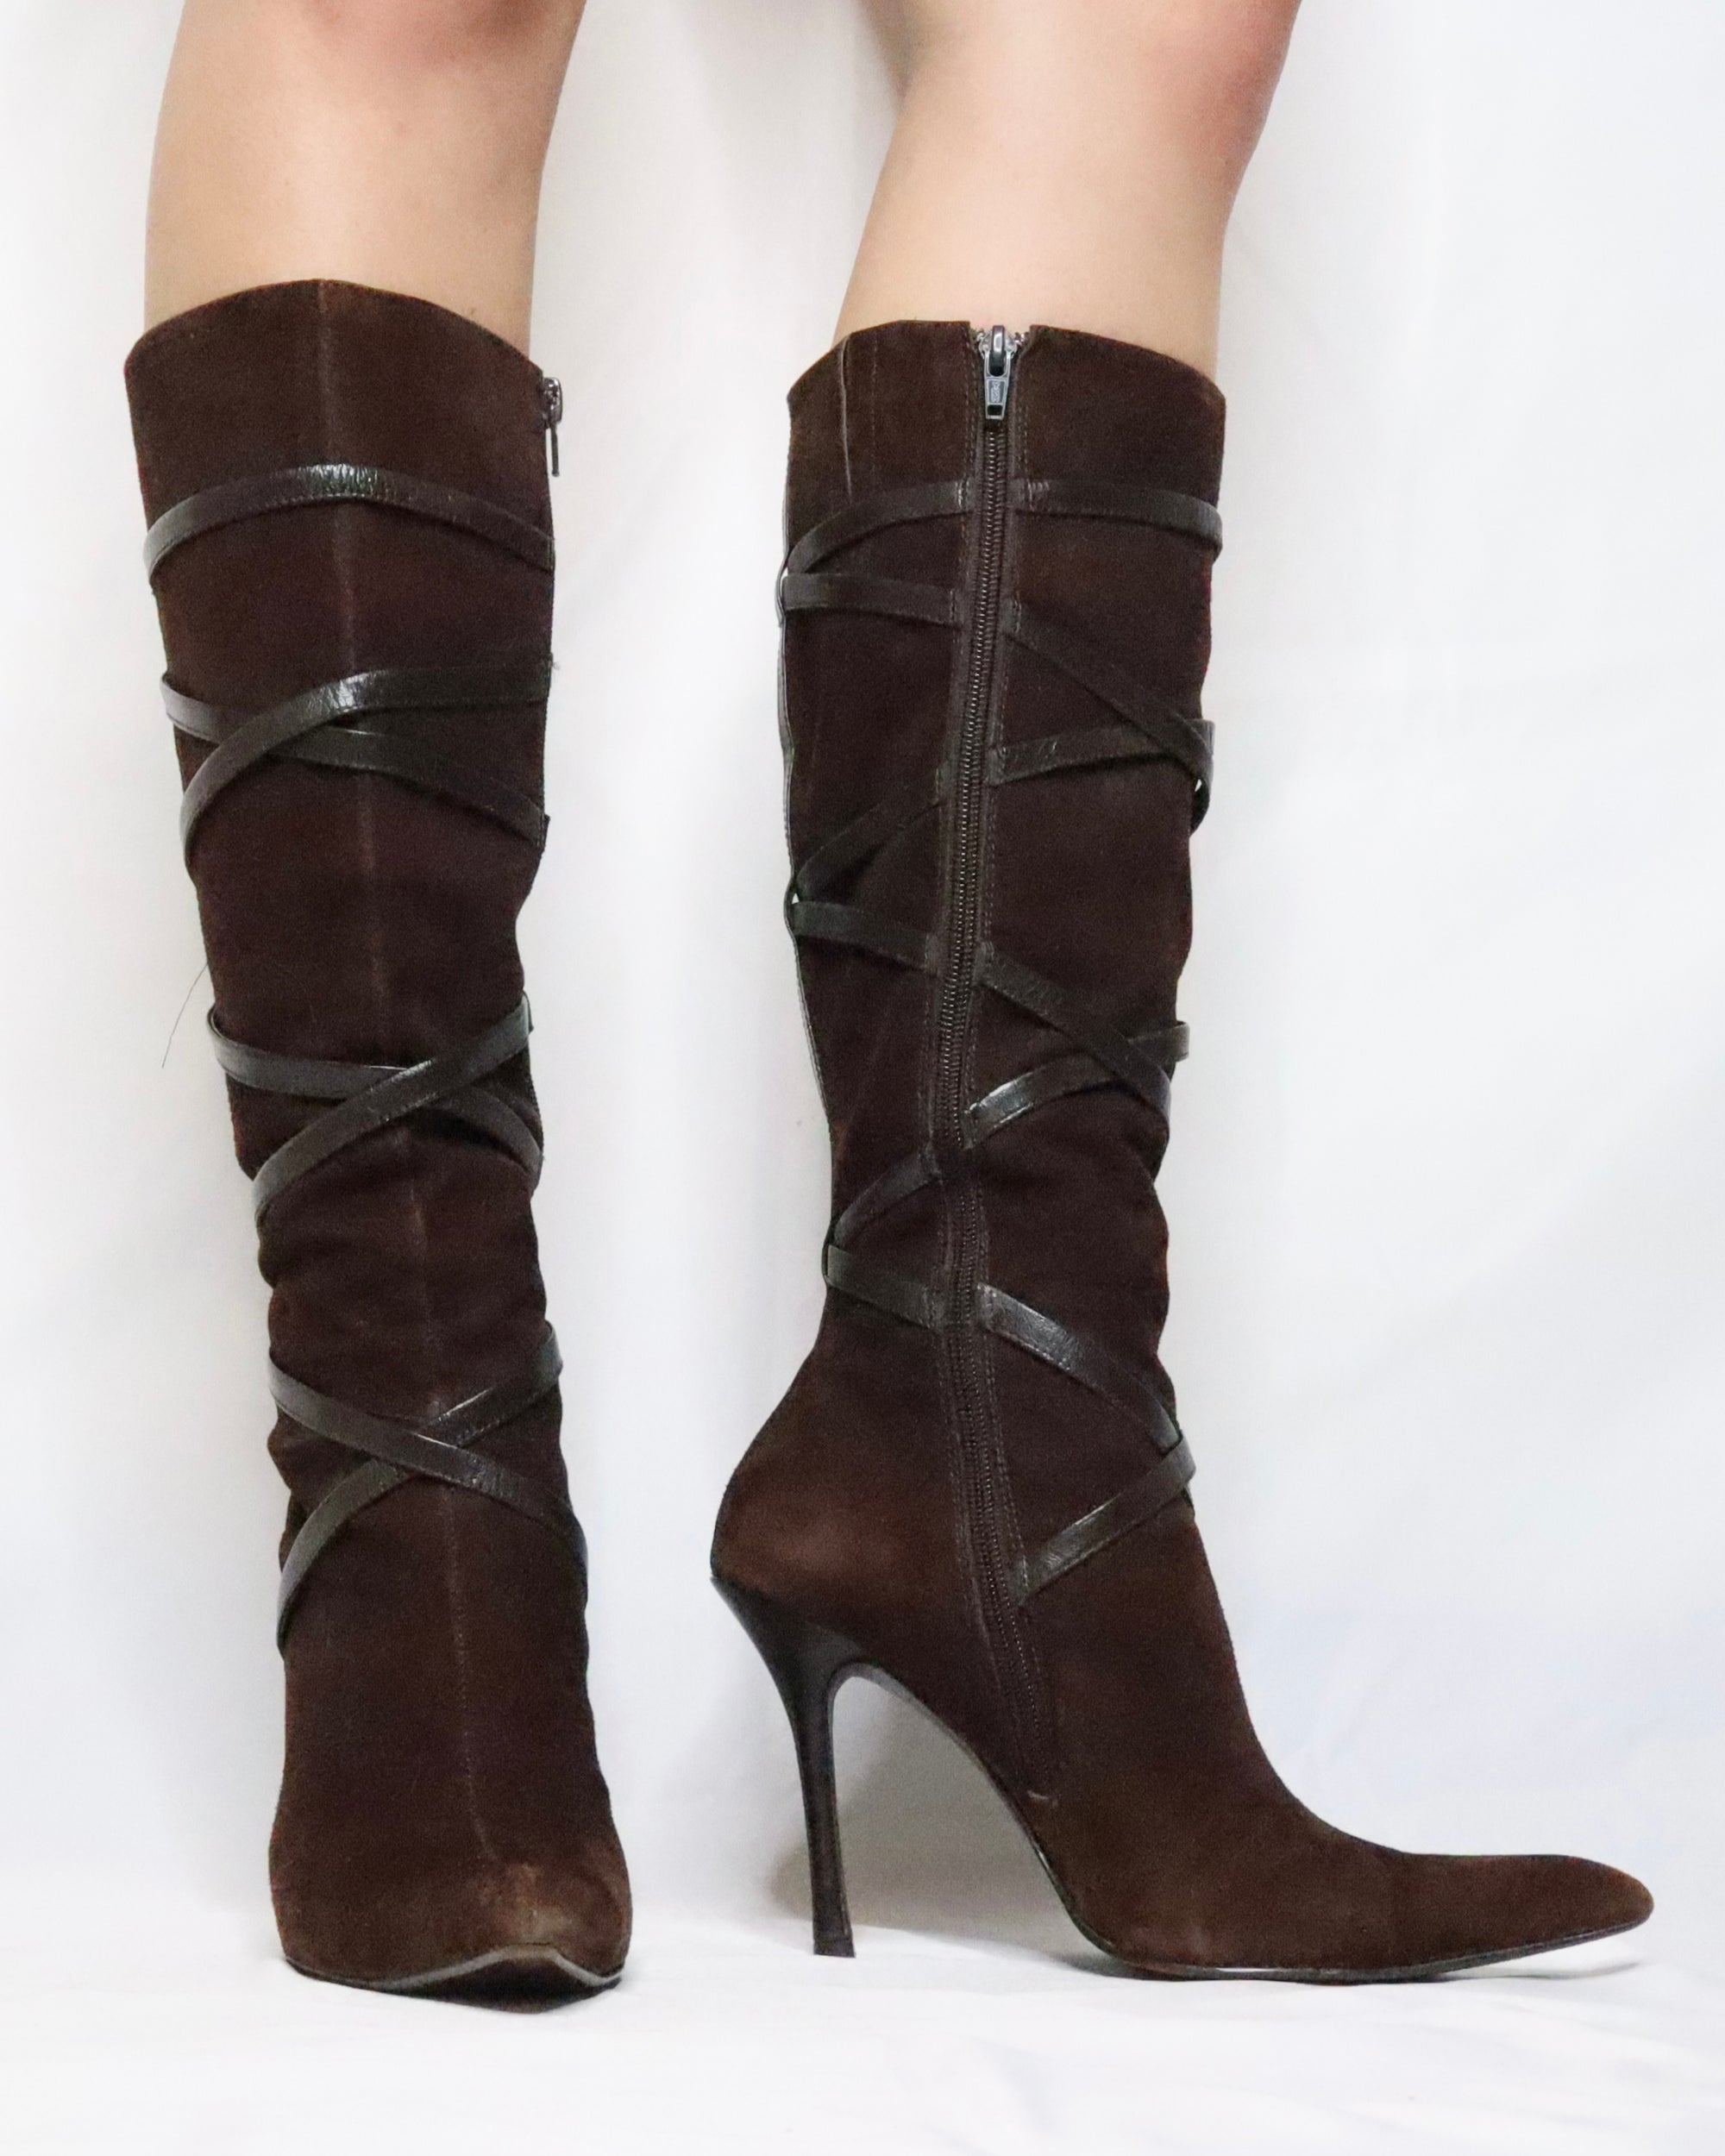 Knee High Stiletto Boots (6.5 US/37 EU)